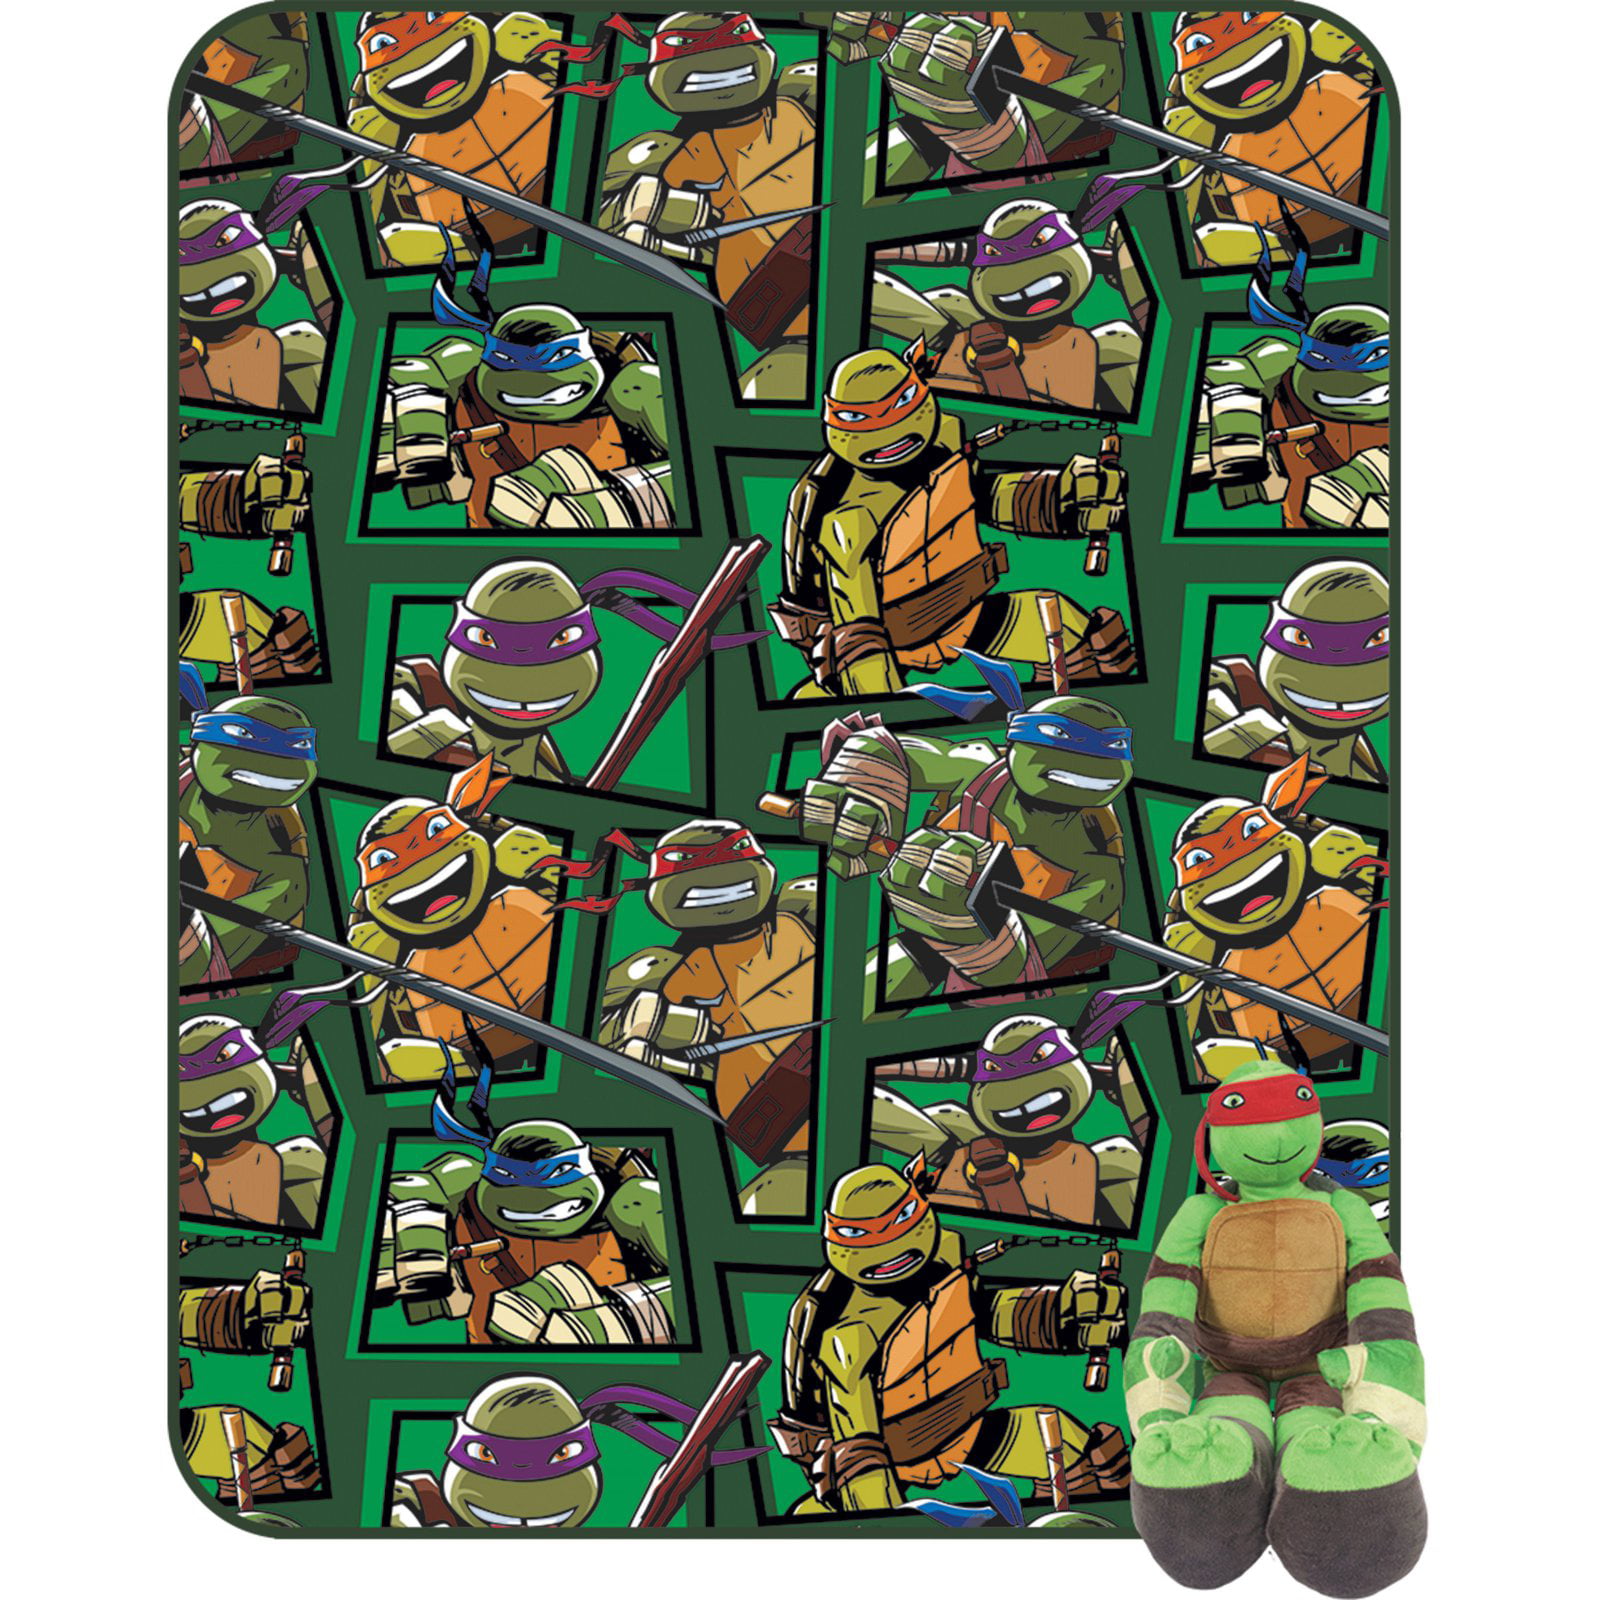 Teenage Mutant Ninja Turtles Twin Blanket With Pillow Buddy By Nickelodeon Walmartcom Walmartcom